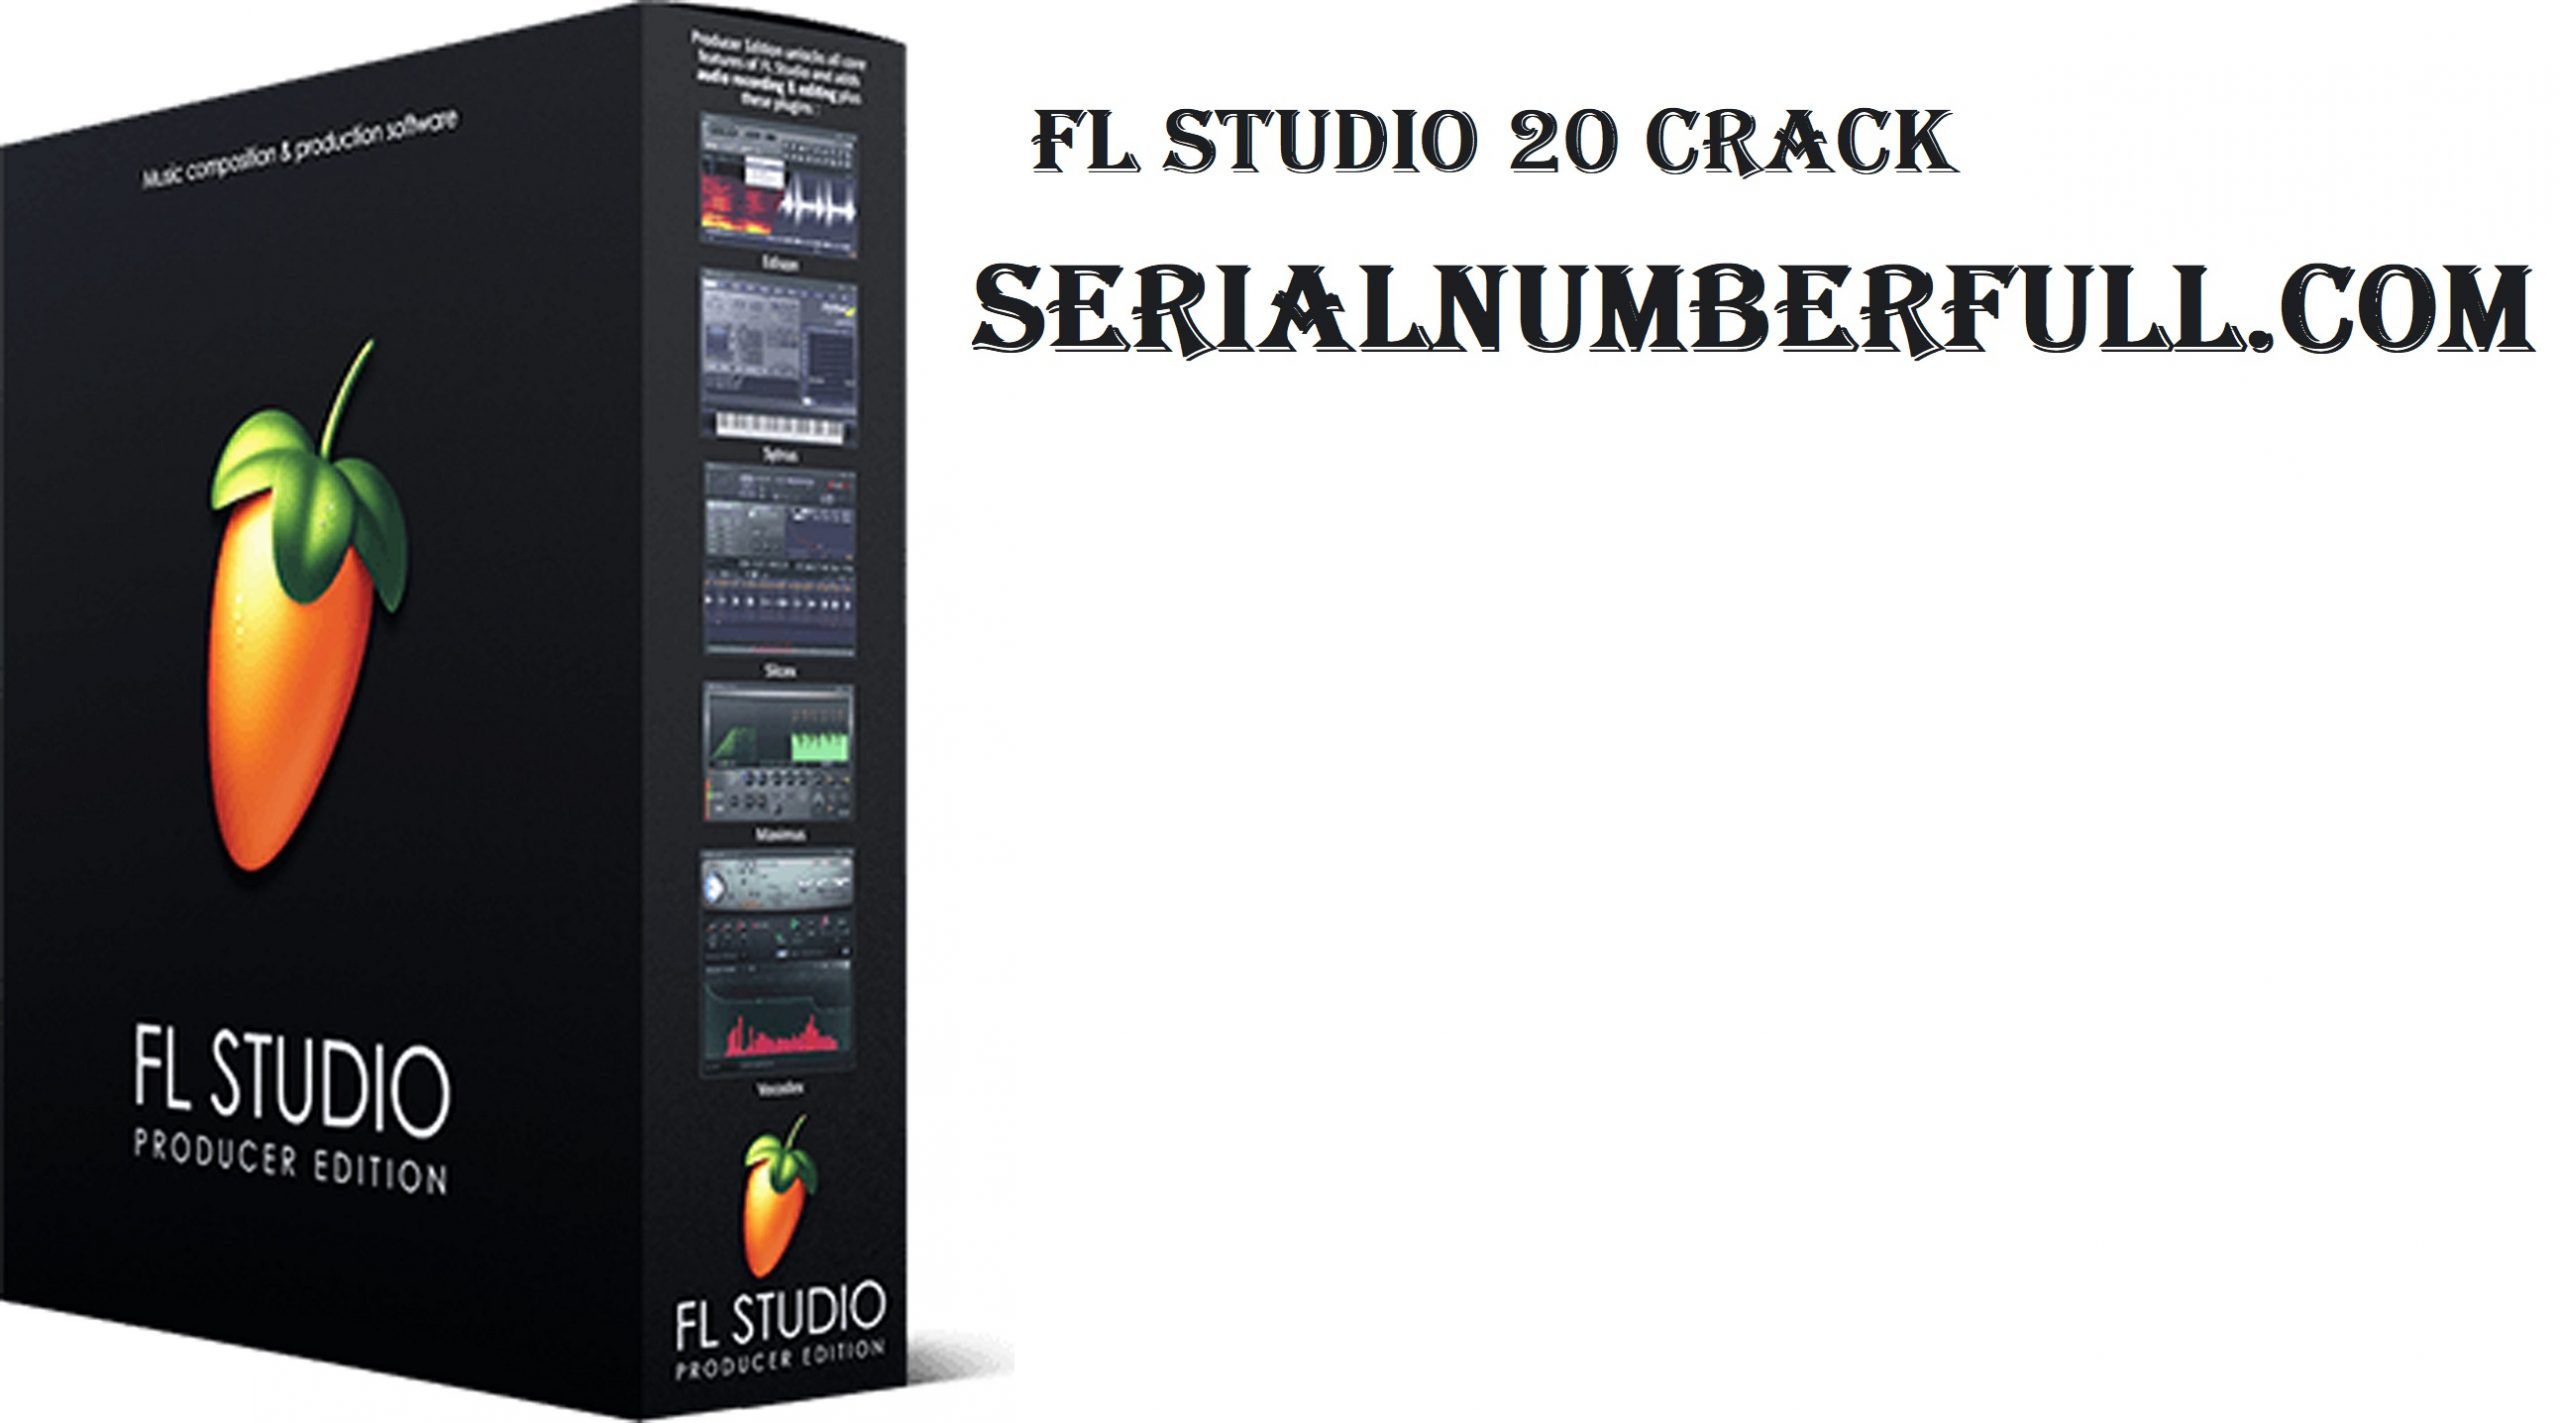 Fl studio 20 crack download 2020